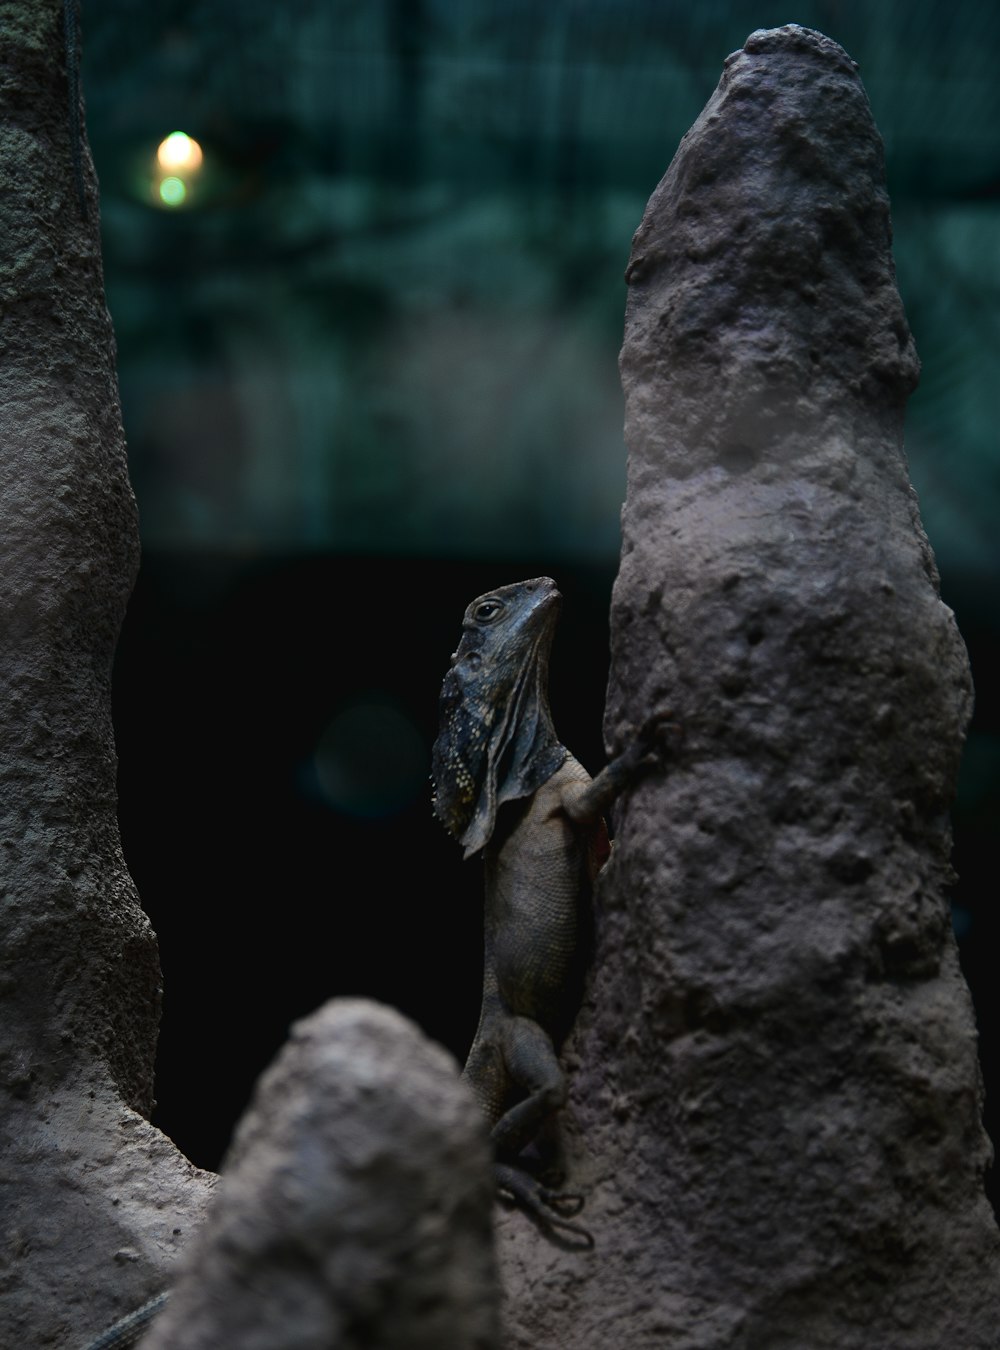 a lizard on a rock